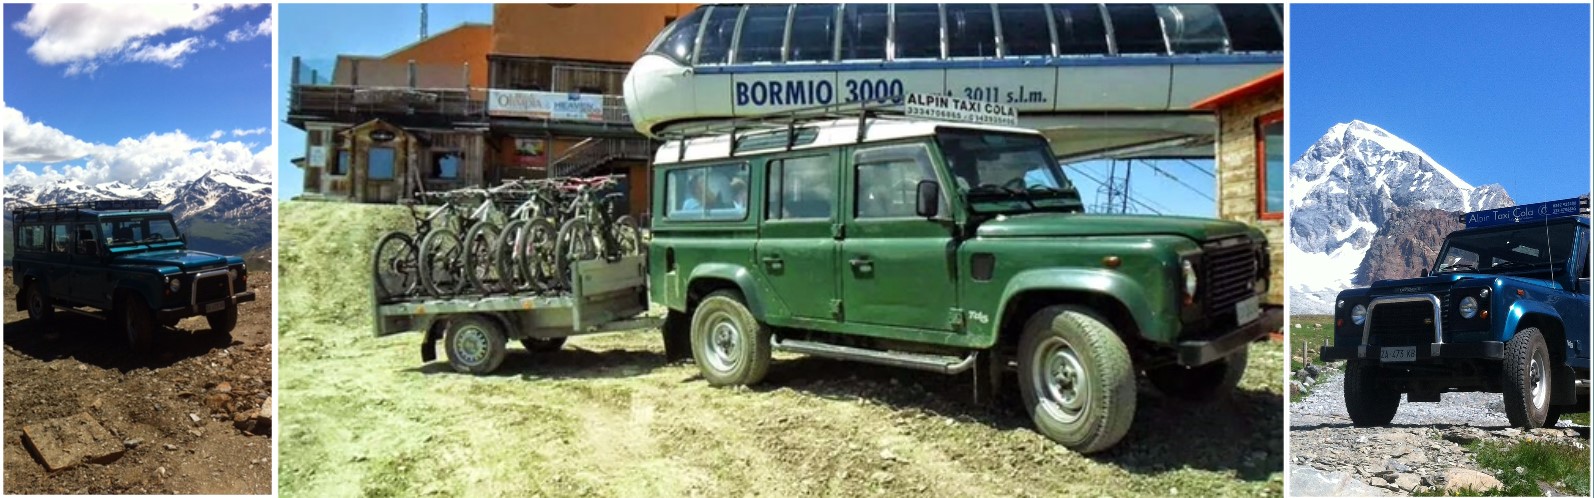 Bormio 3000 con jeep taxi